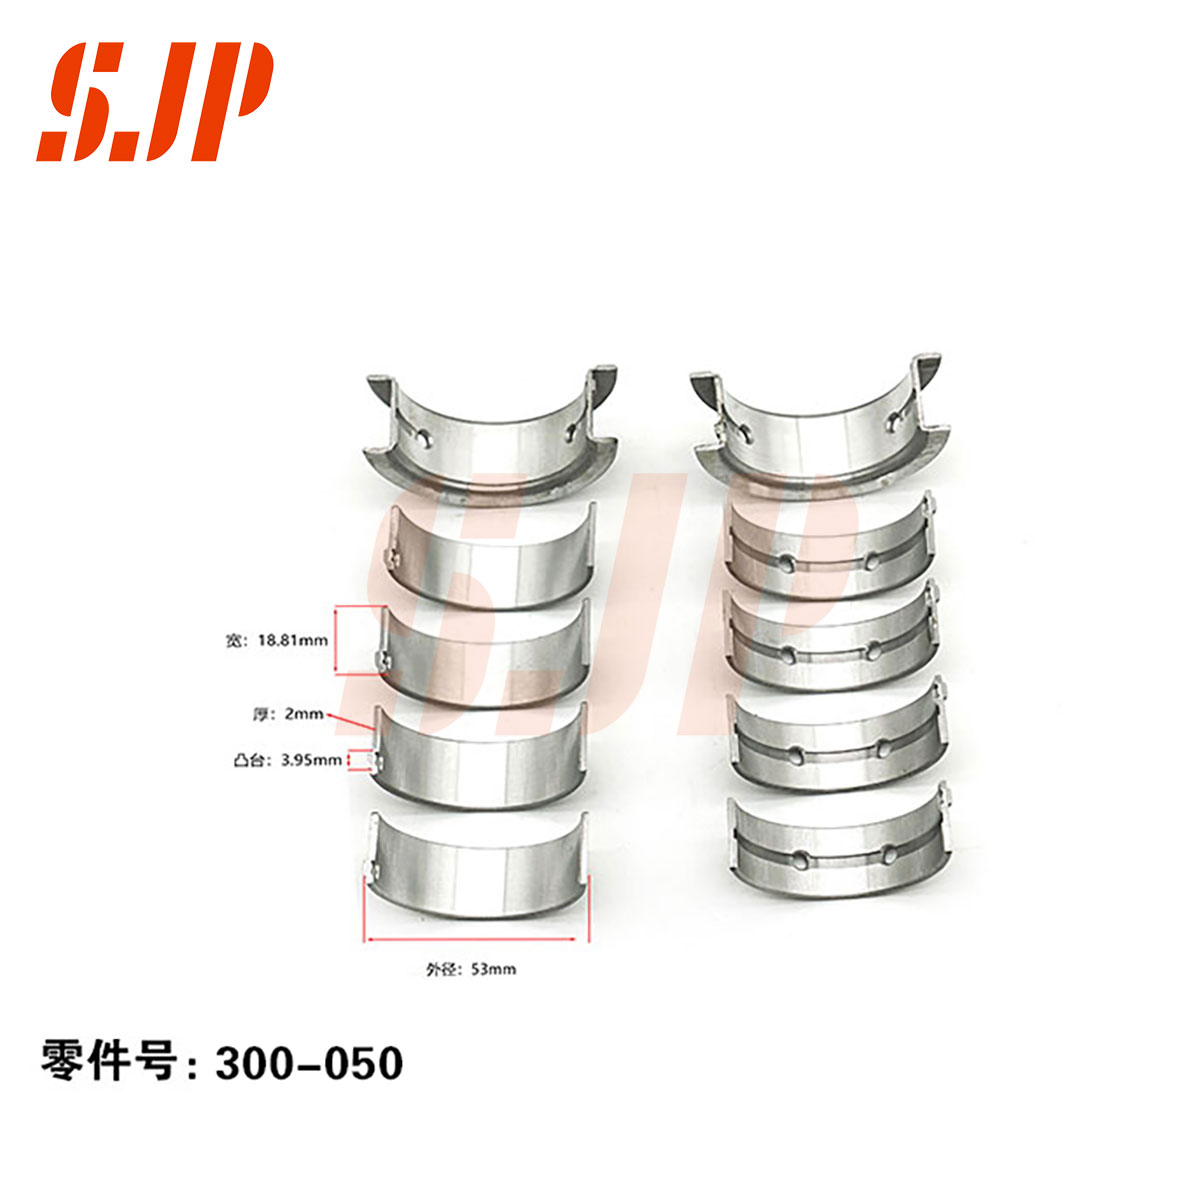 SJ-300-050 Main Bearing Set For 4G18/ DongFeng Lingzhi 1.8